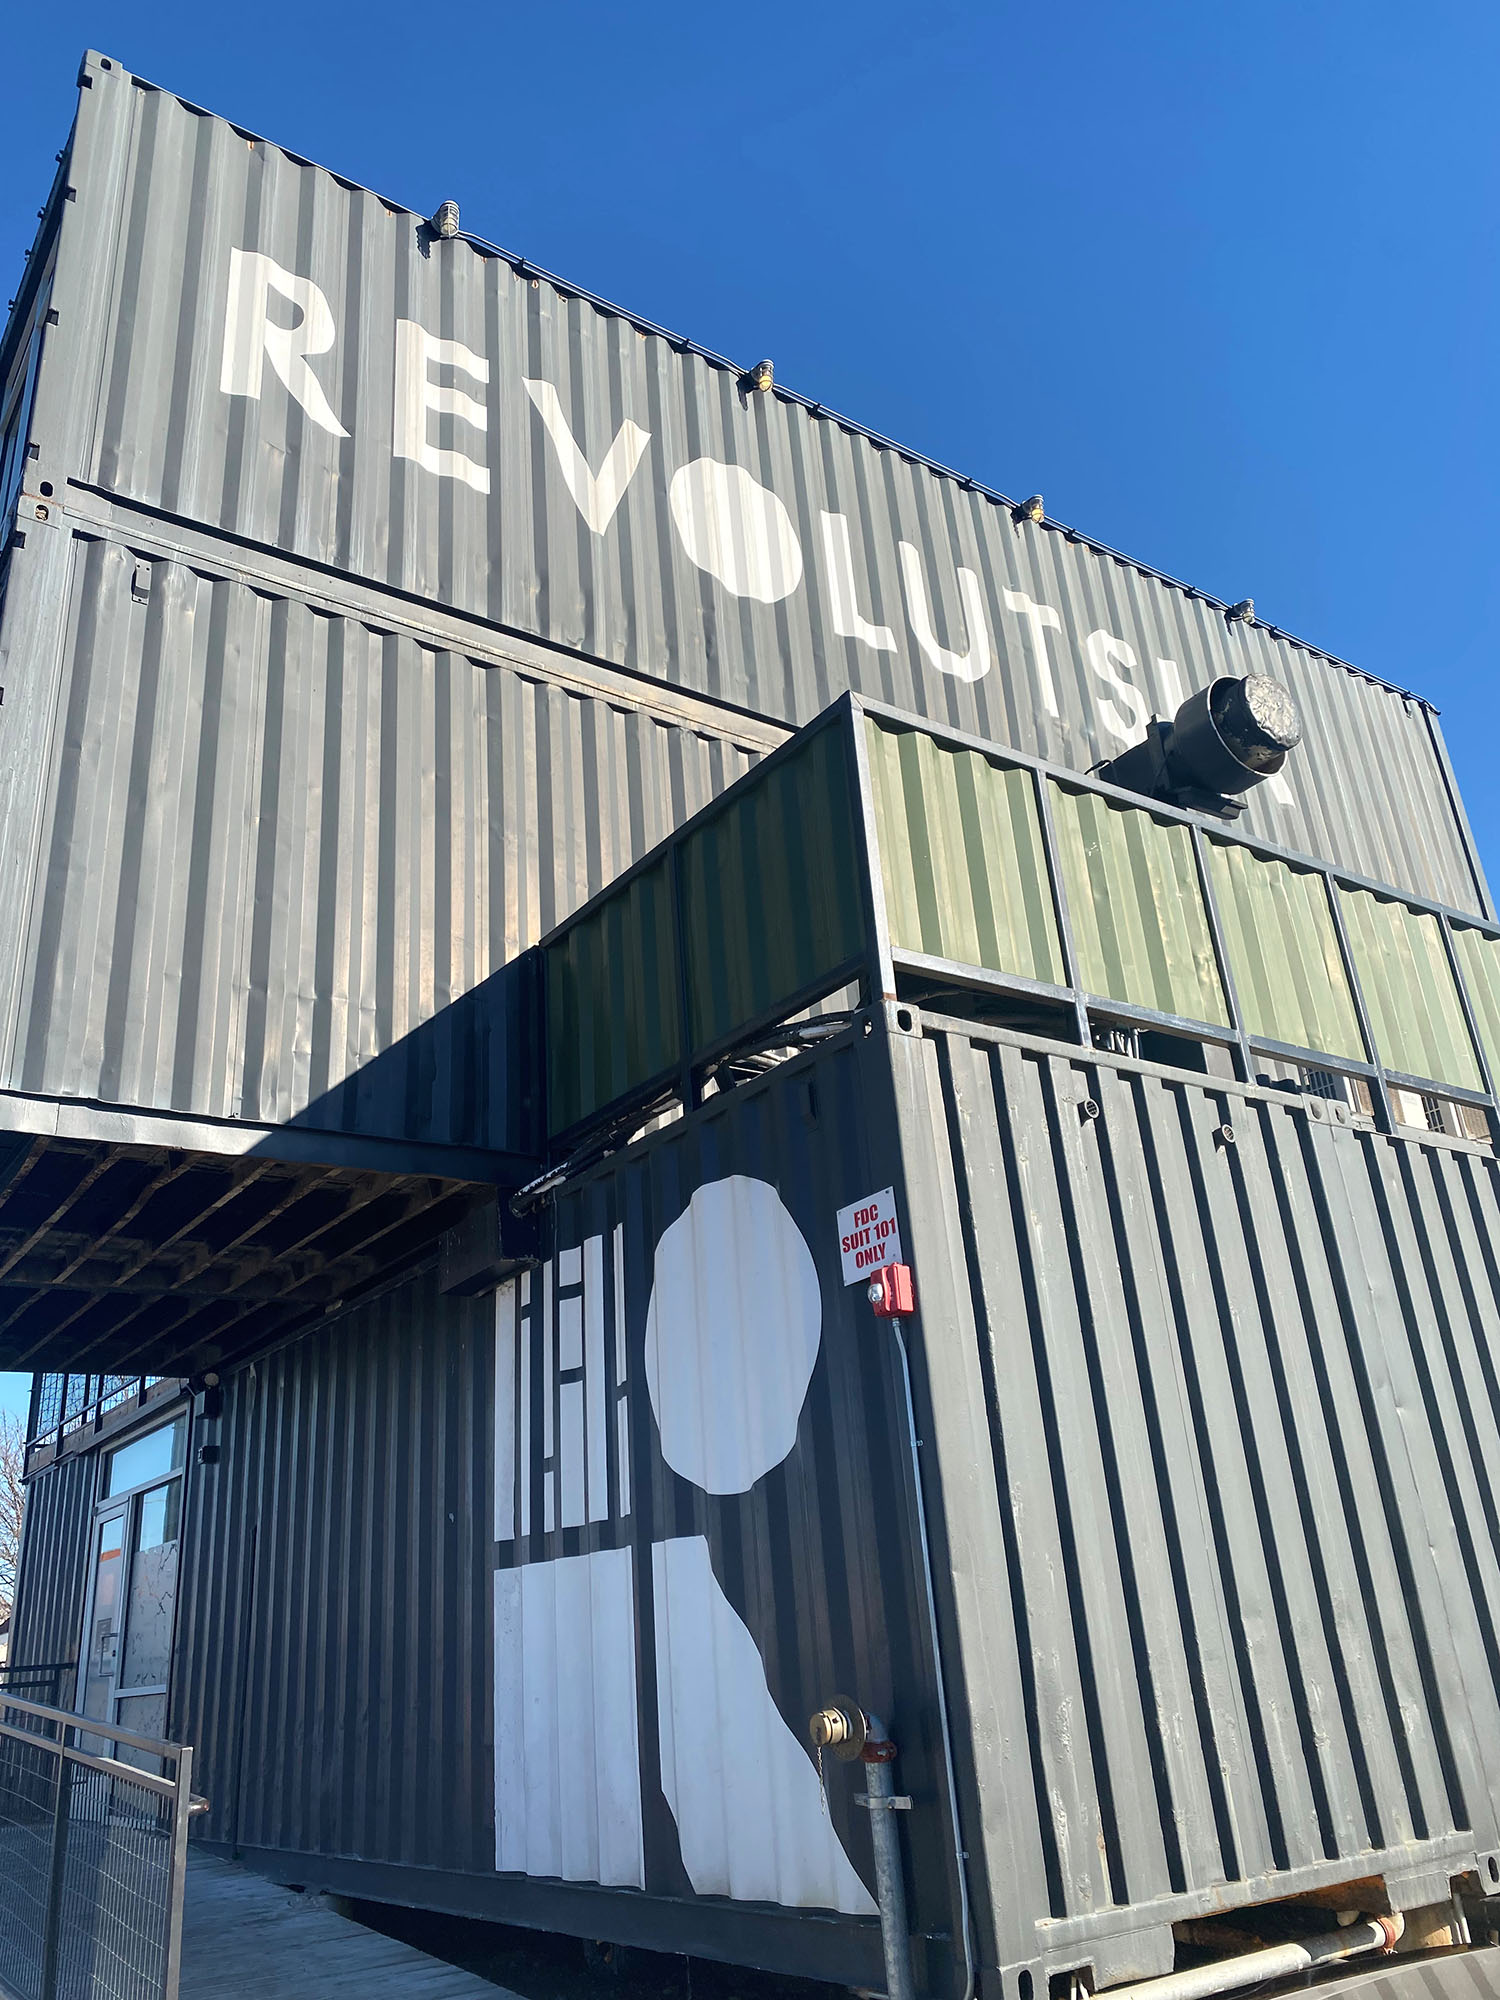 Exterior shipping containers at Revolutsia in Wichita, Kansas